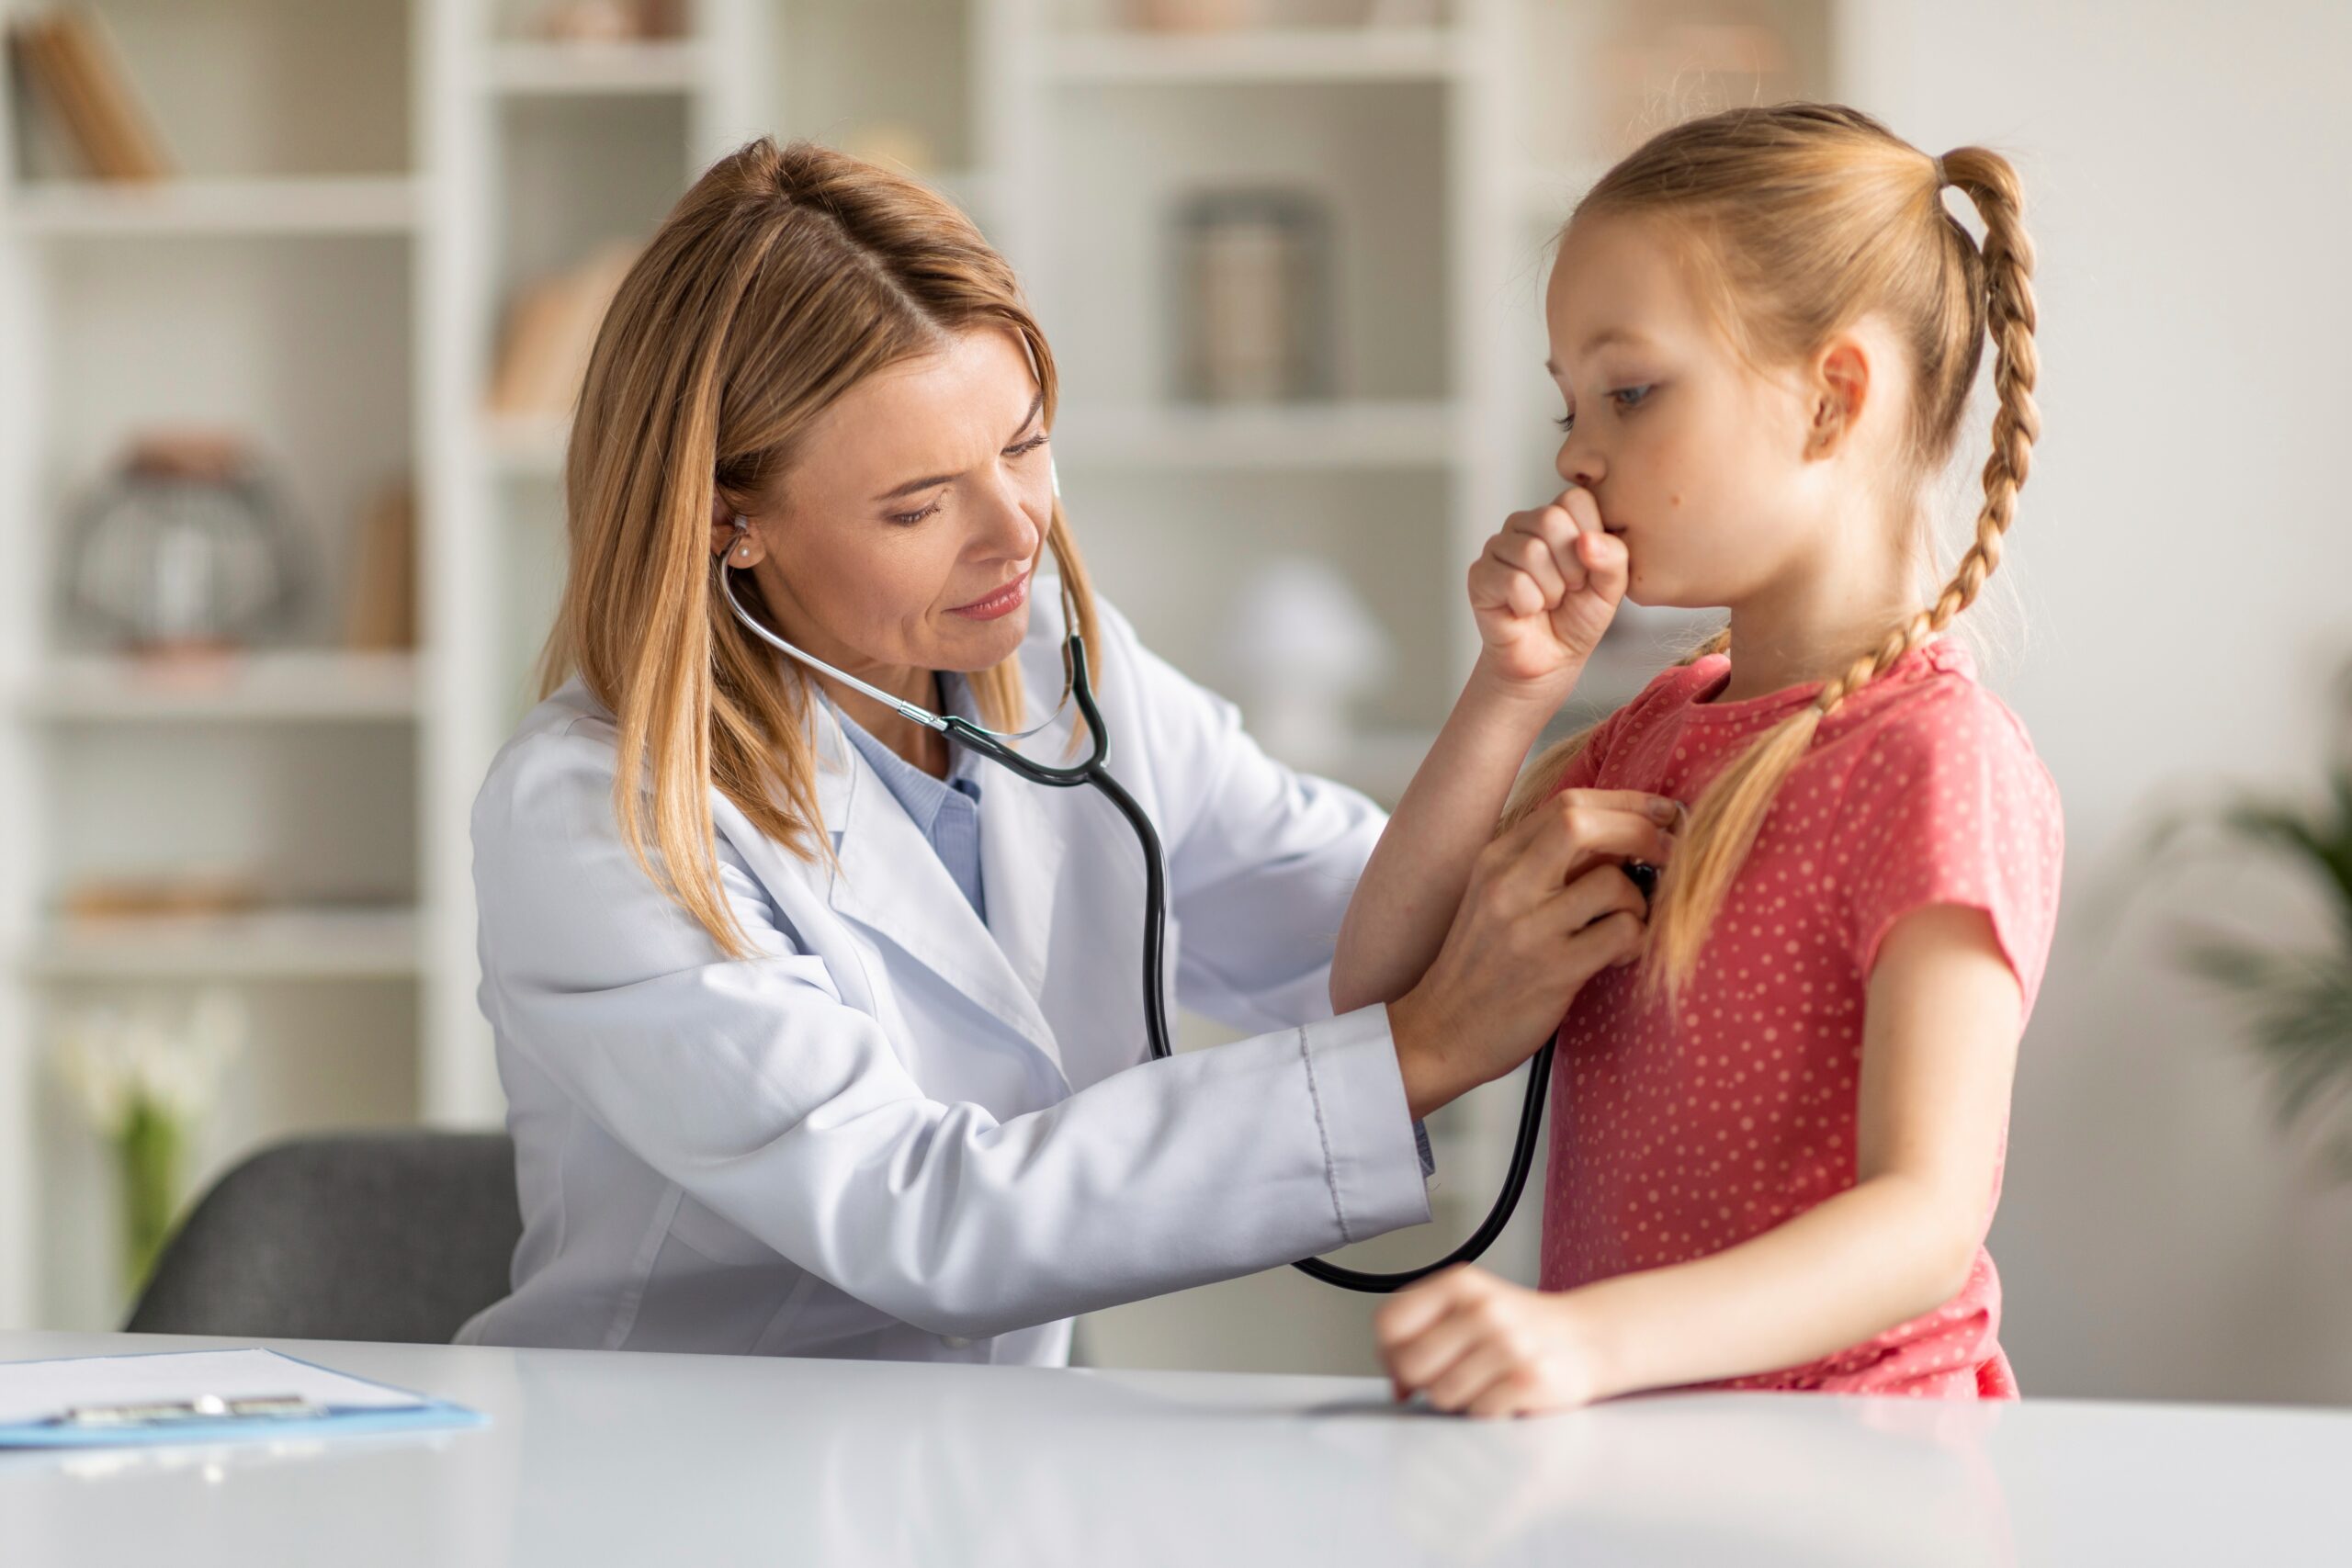 Doctor listening to child through stethoscope